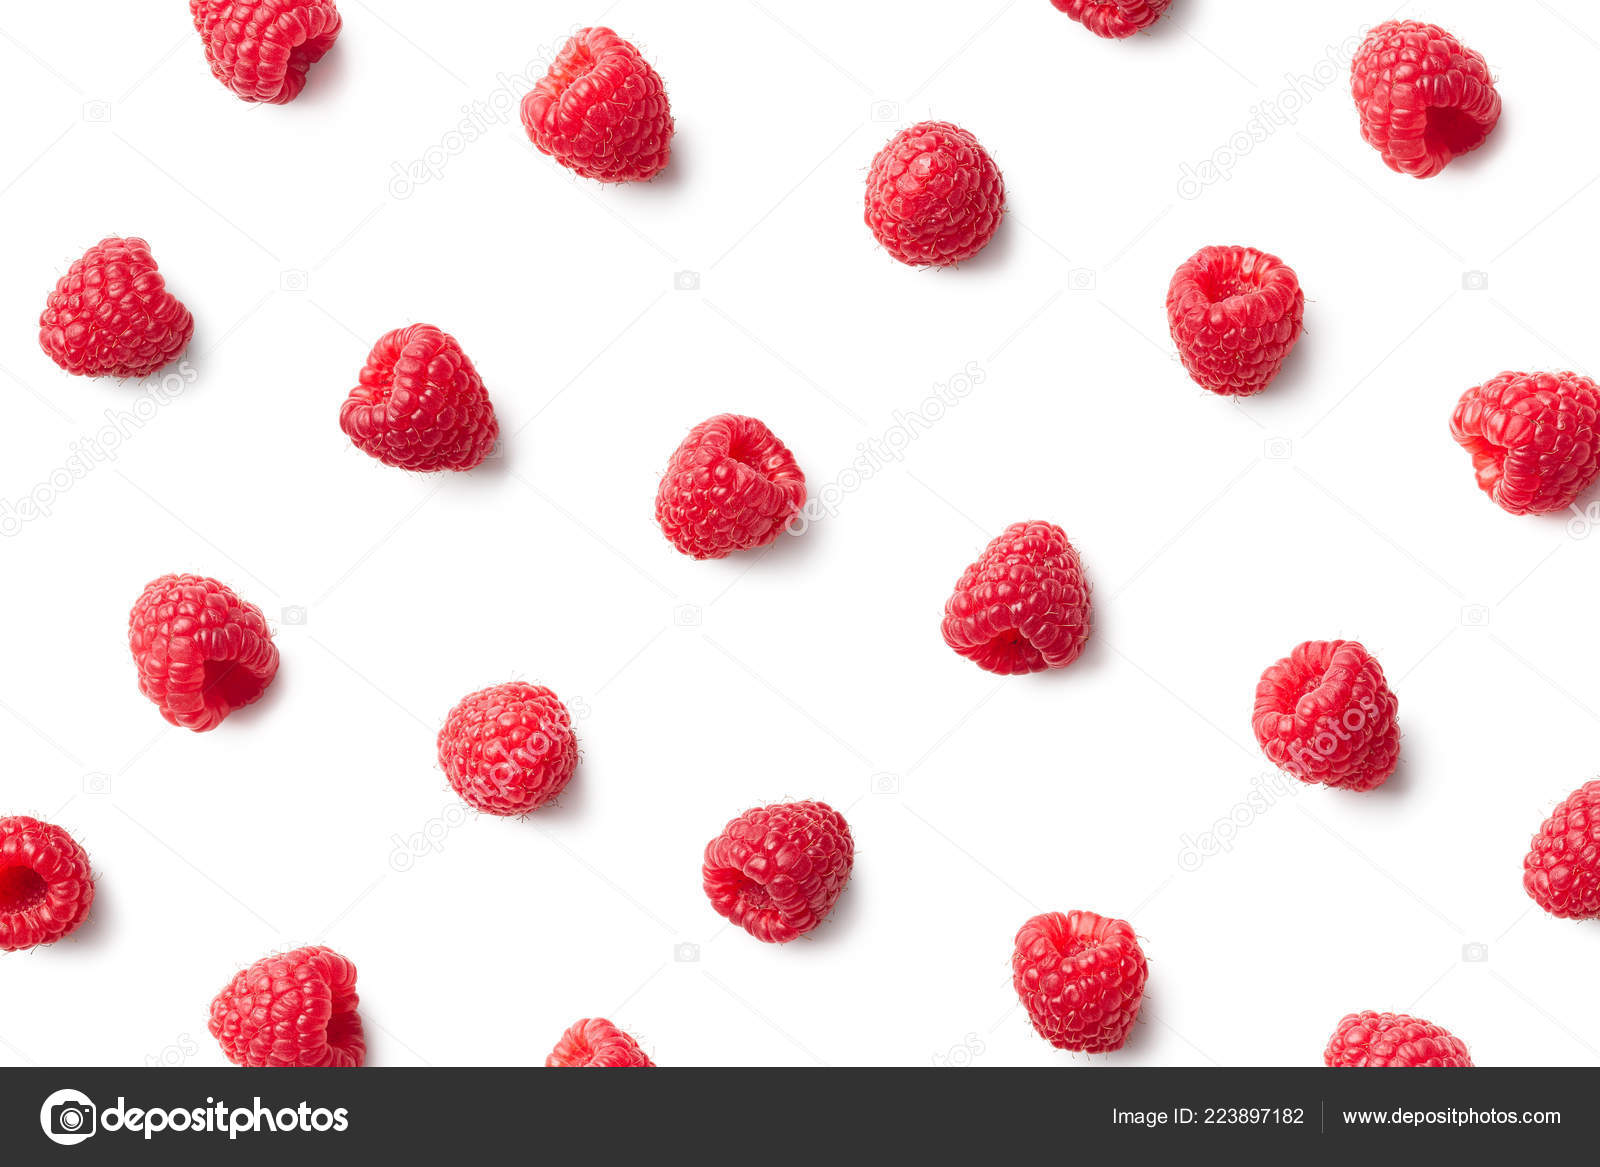 Wallpaper ID 326255  Food Berry Phone Wallpaper Raspberry Strawberry  Fruit Blackberry Blueberry 1440x2560 free download